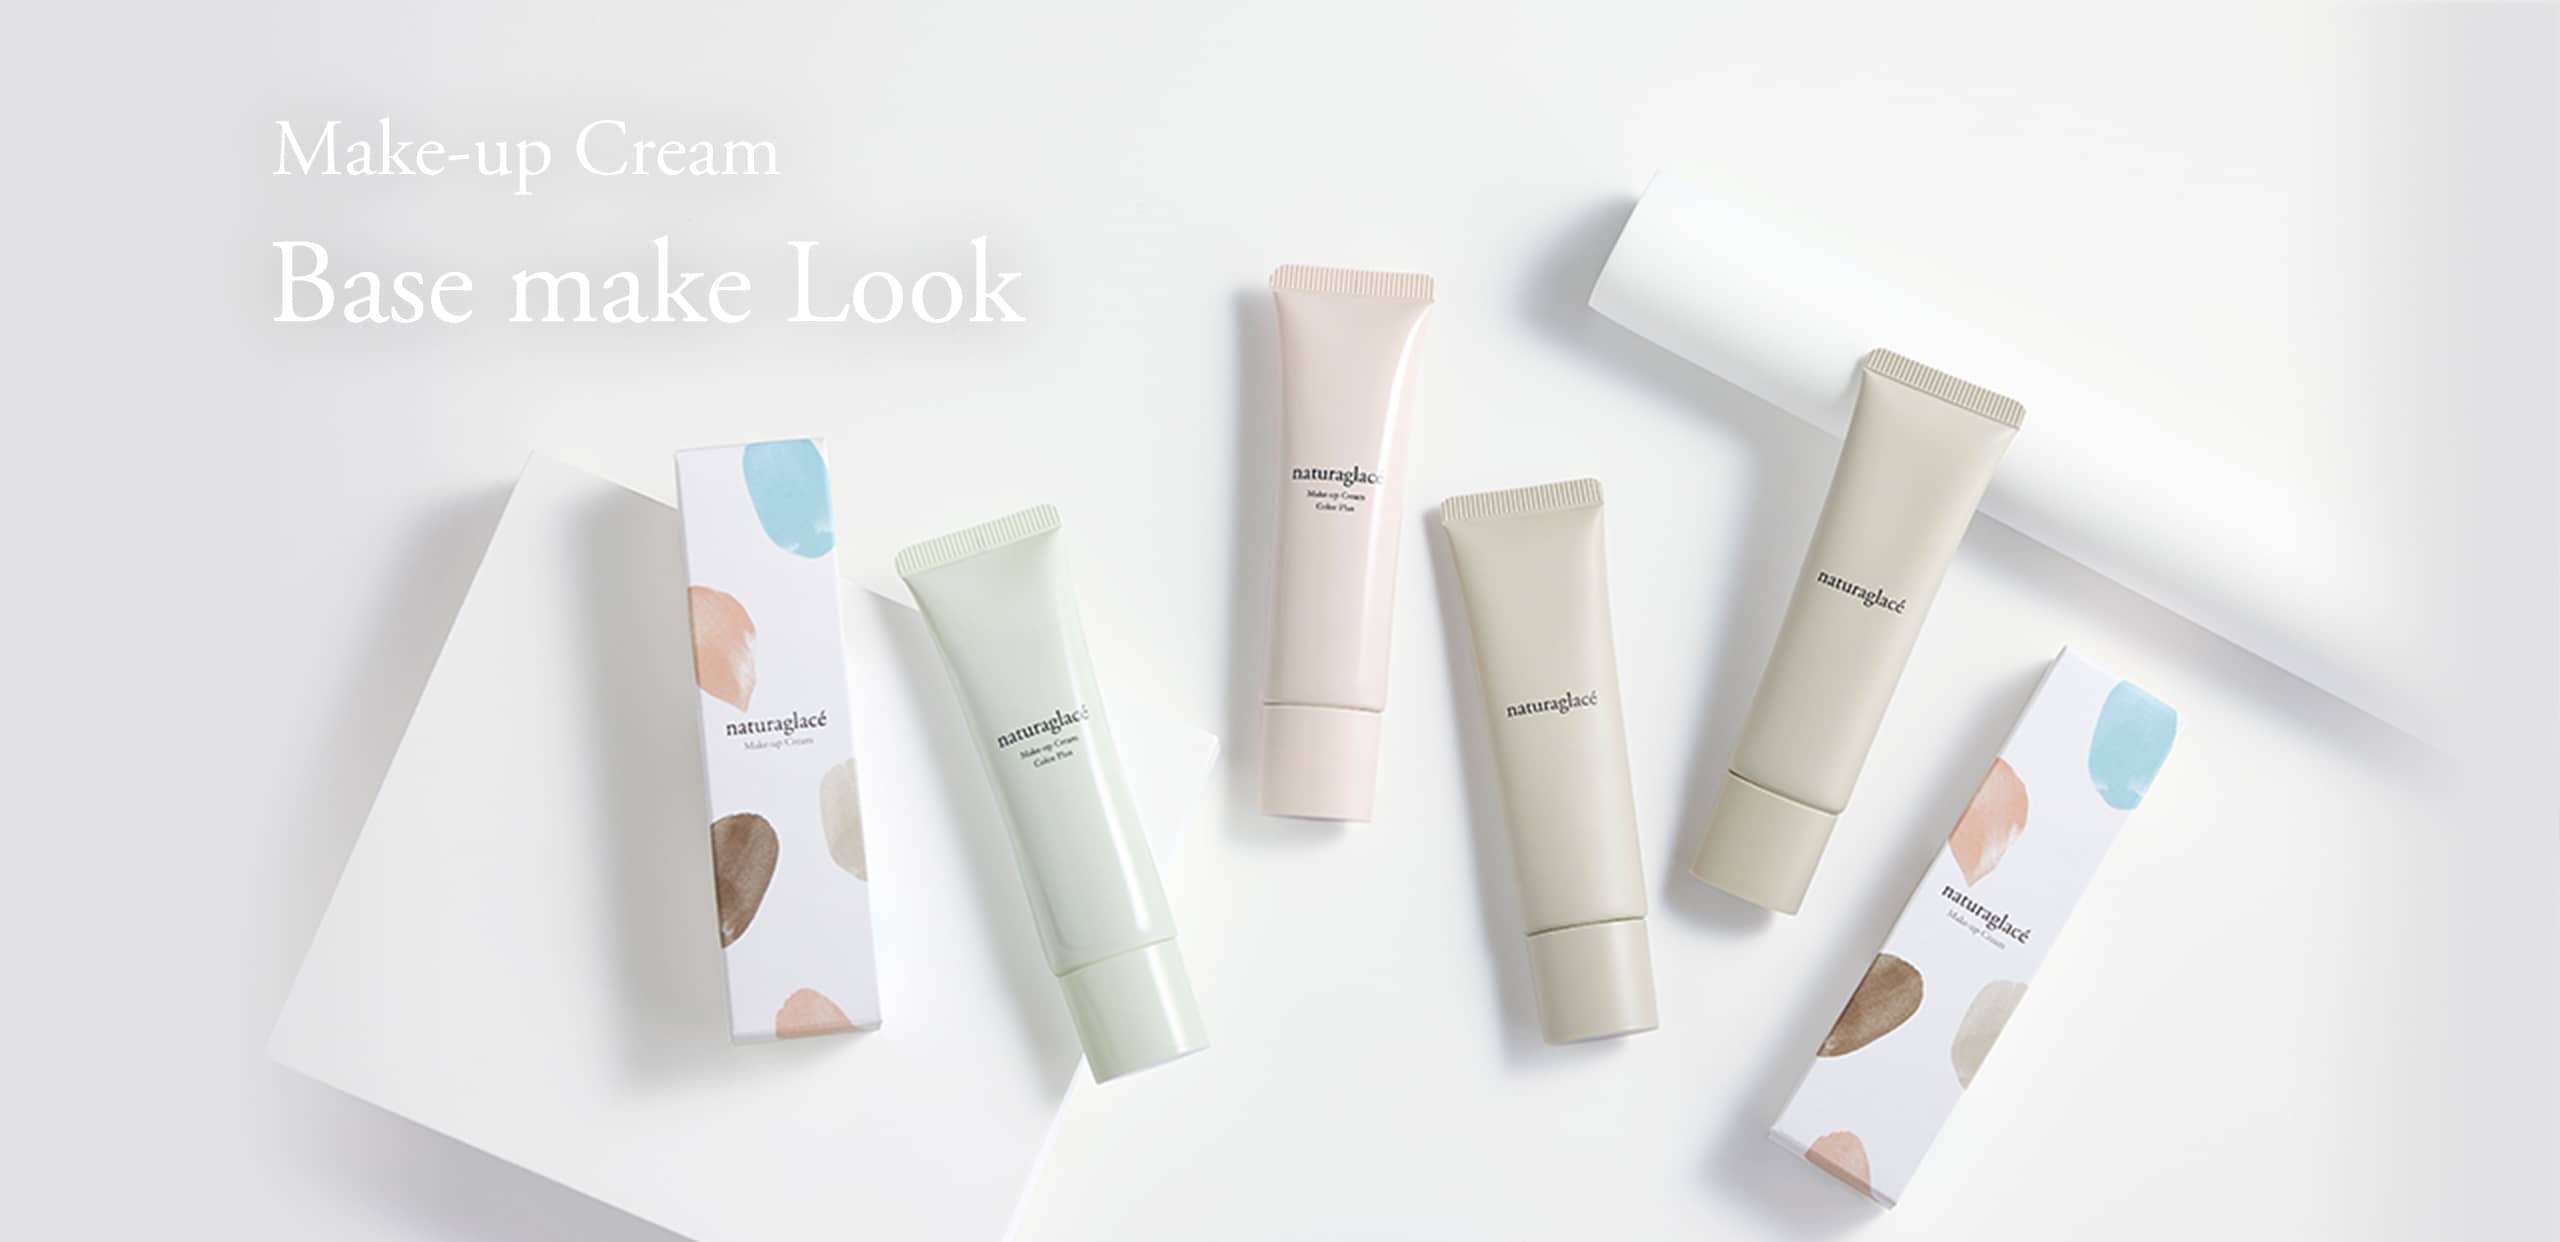 Make-up Cream Base make Look